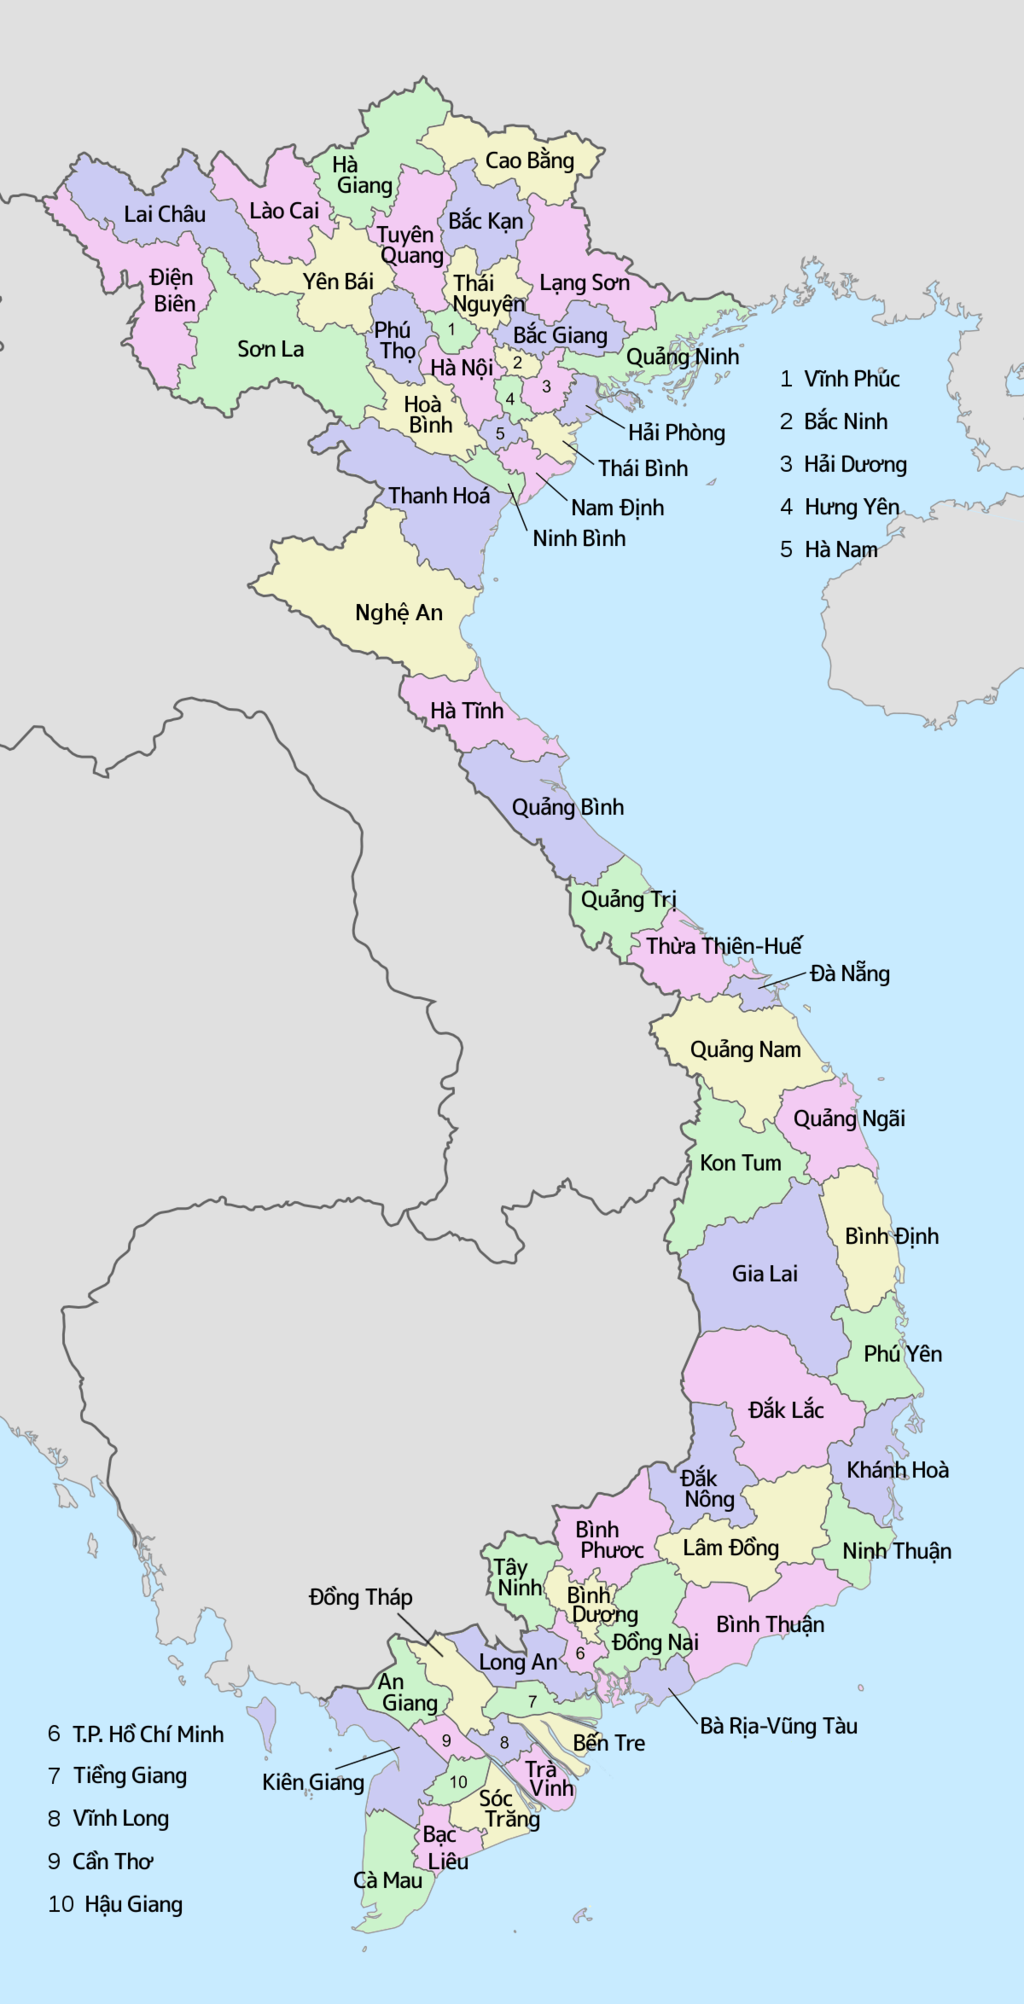 Viet Nam Administrative 